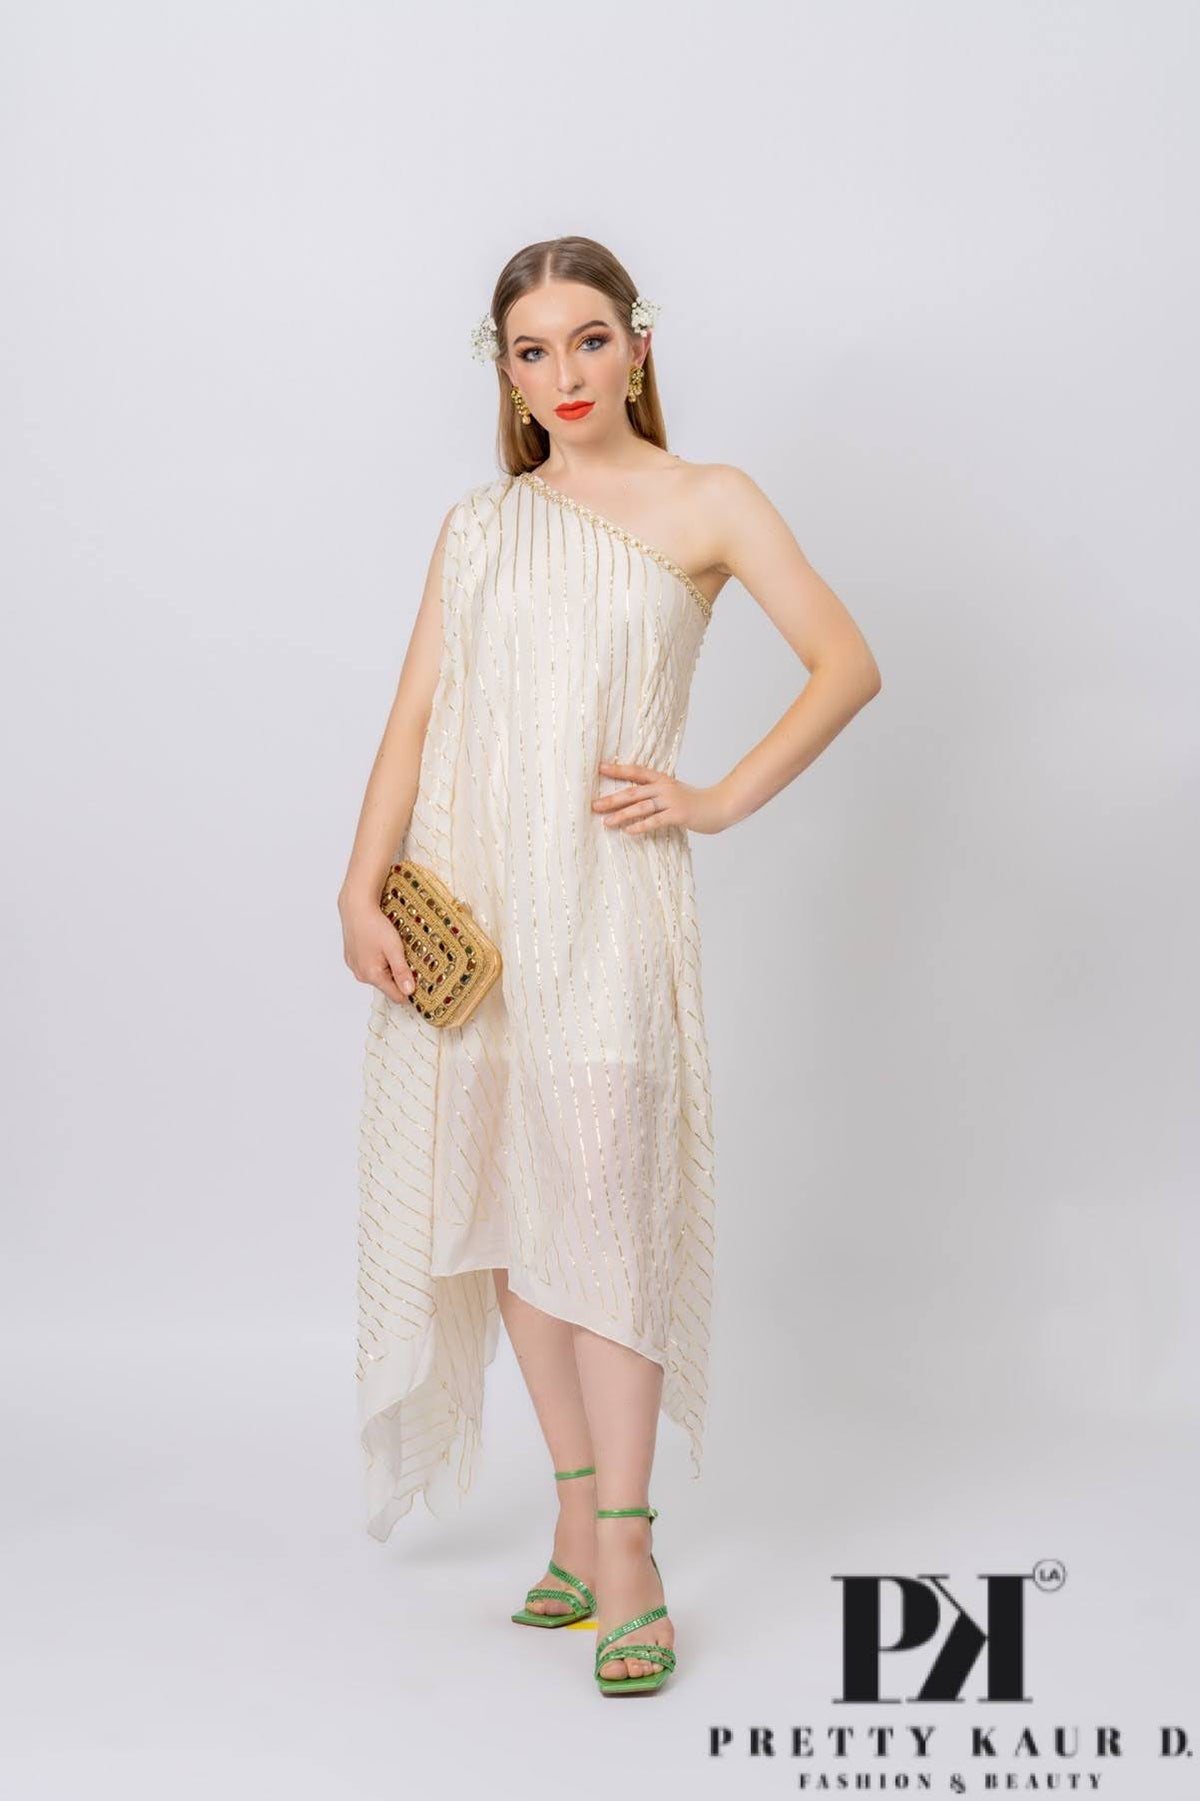 Pretty-Kaur-fashion-beauty-White-Off Shoulder-Gold-Lurex-Stripes-Dress-1